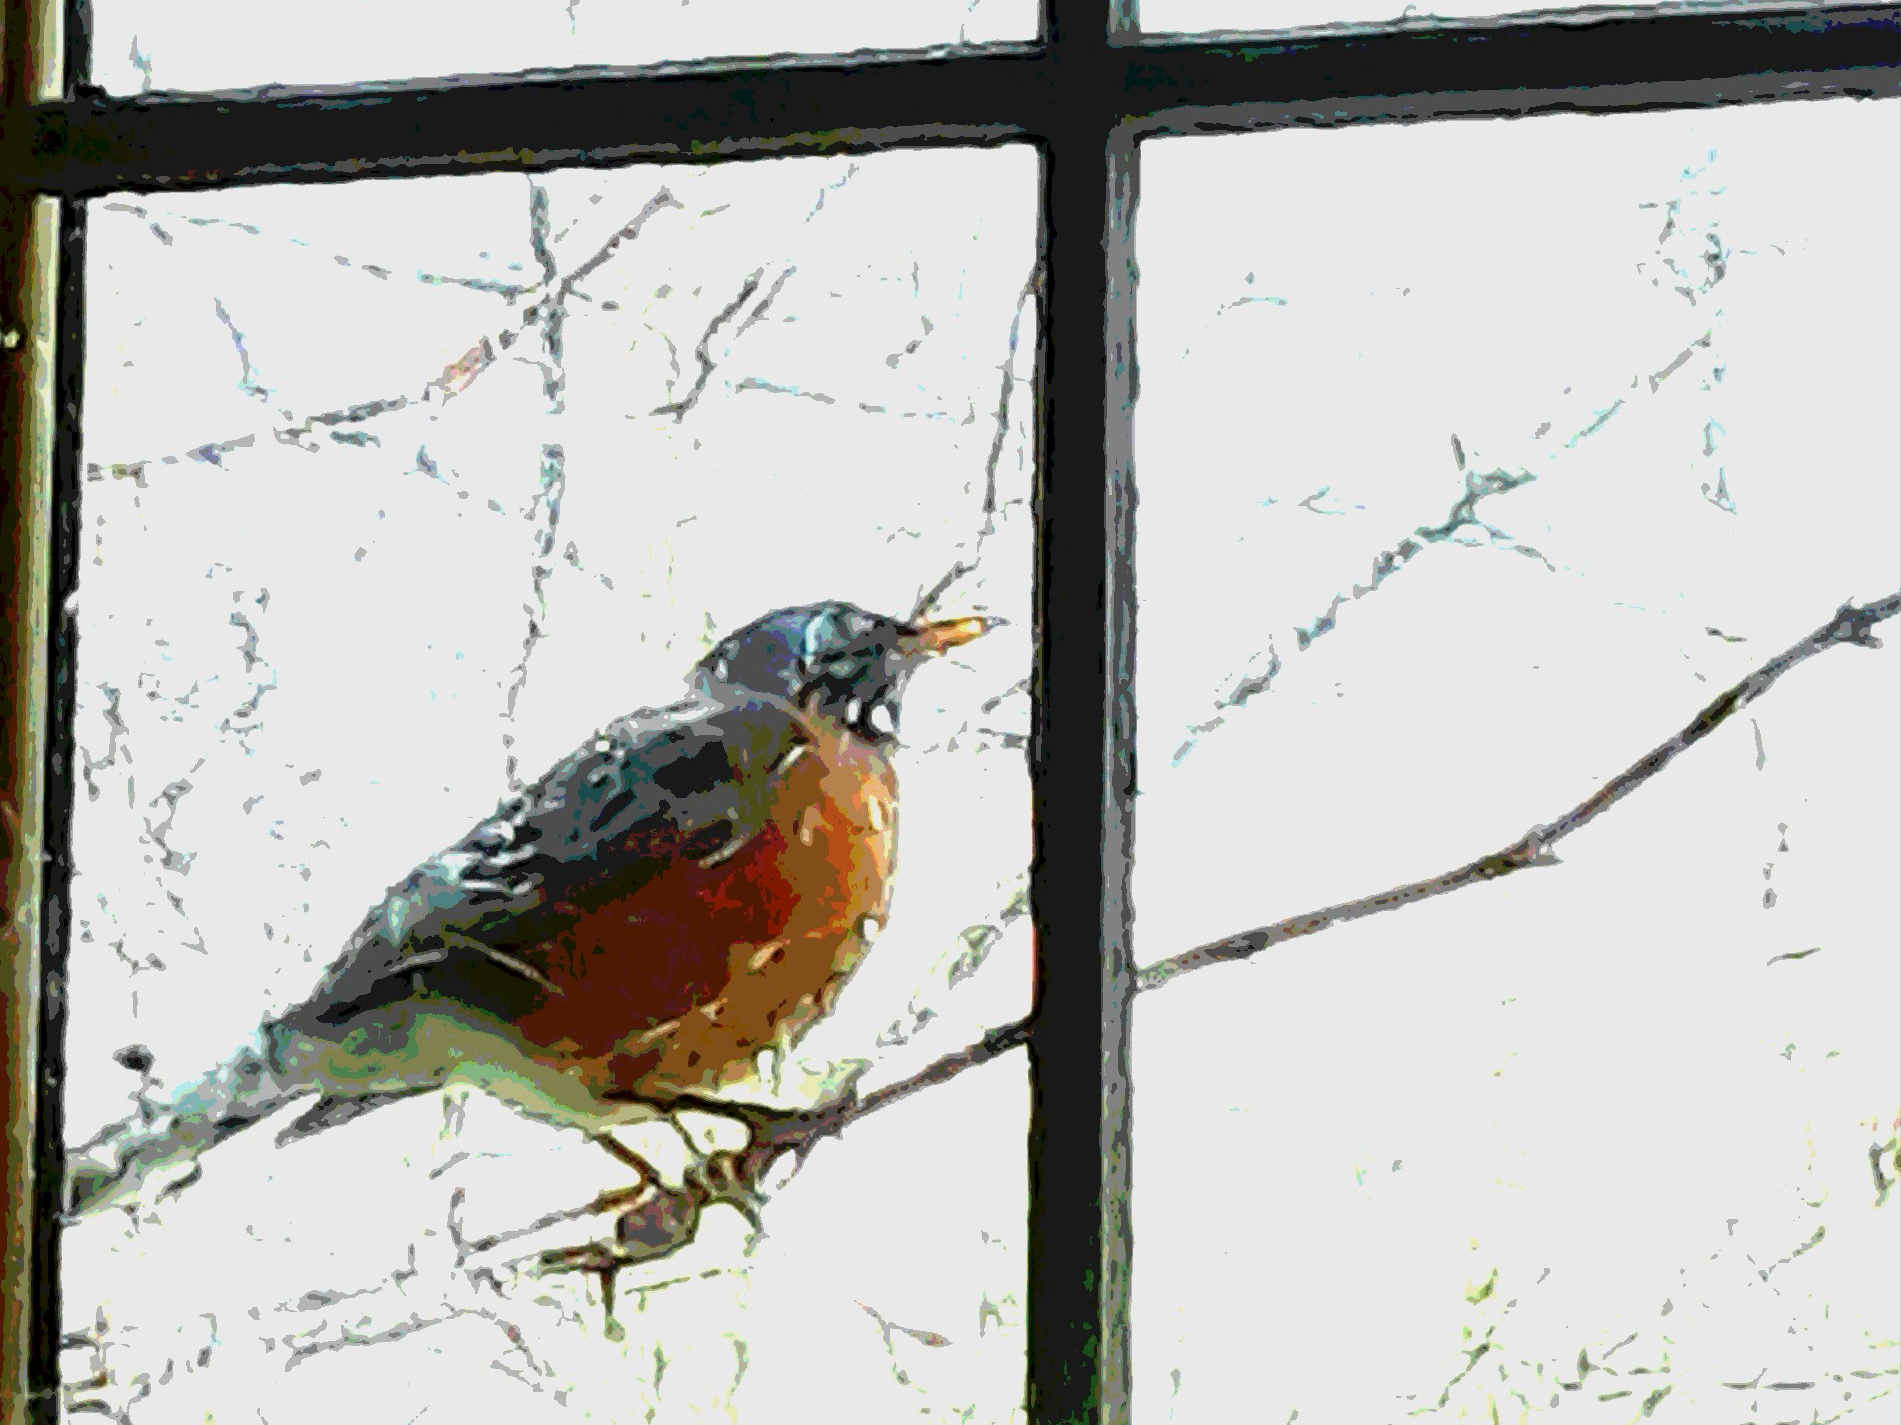 A robin perches on a vine stem outside a rain covered window